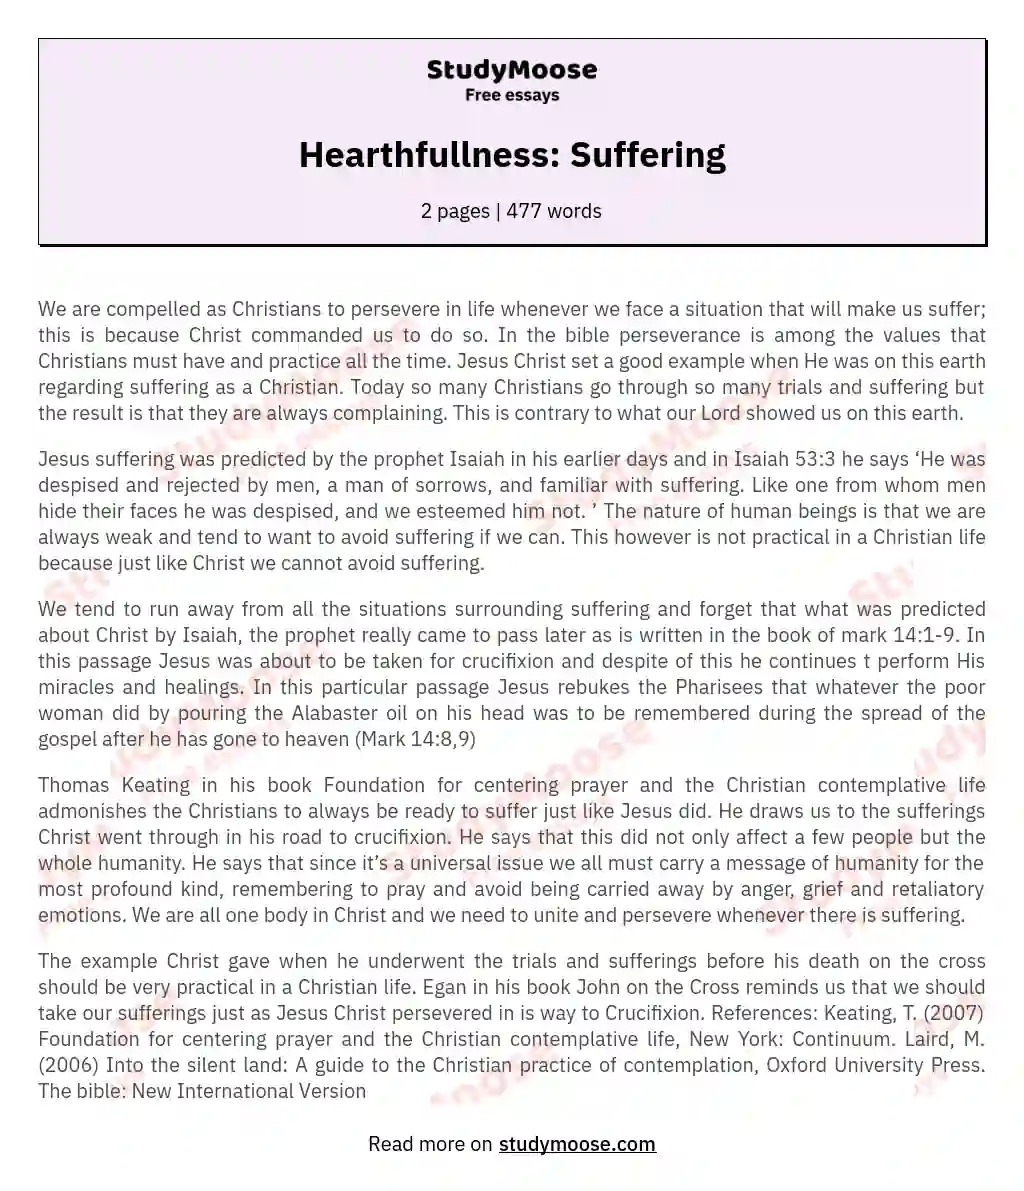 Hearthfullness: Suffering essay